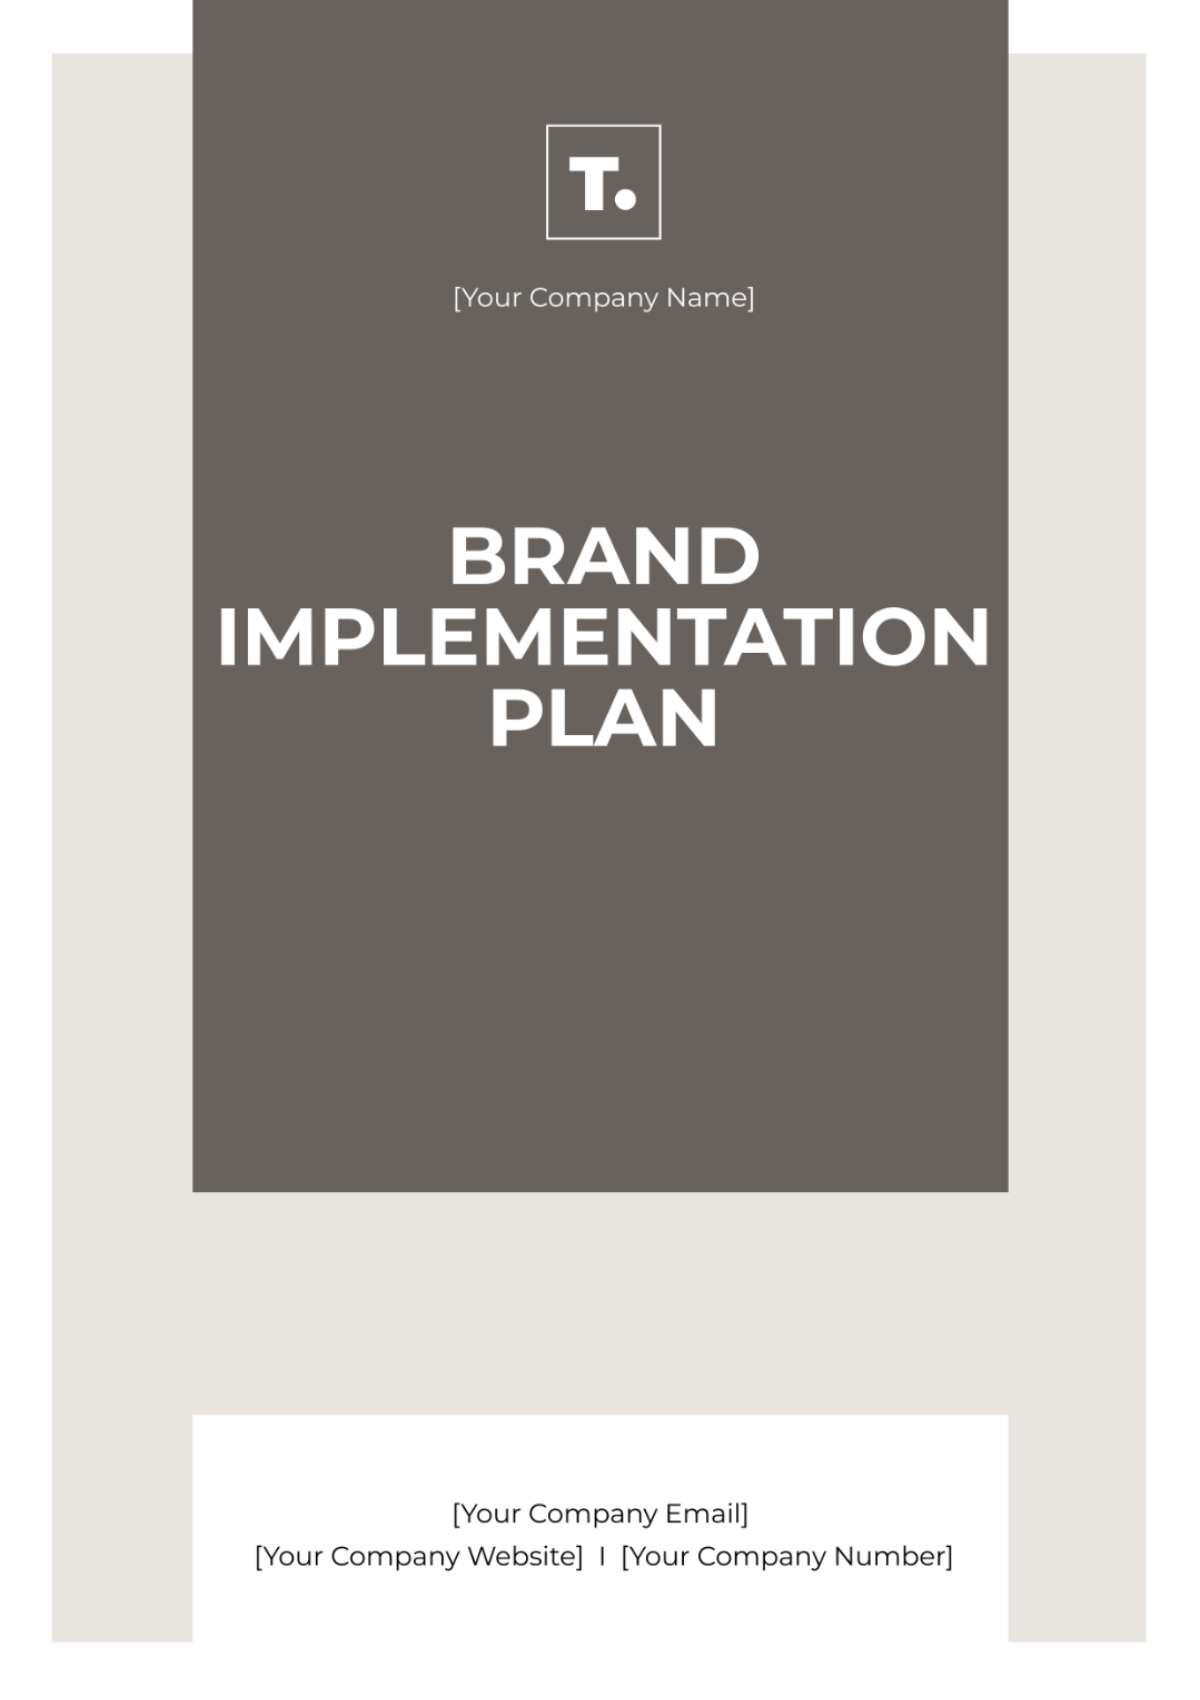 Brand Implementation Plan Template